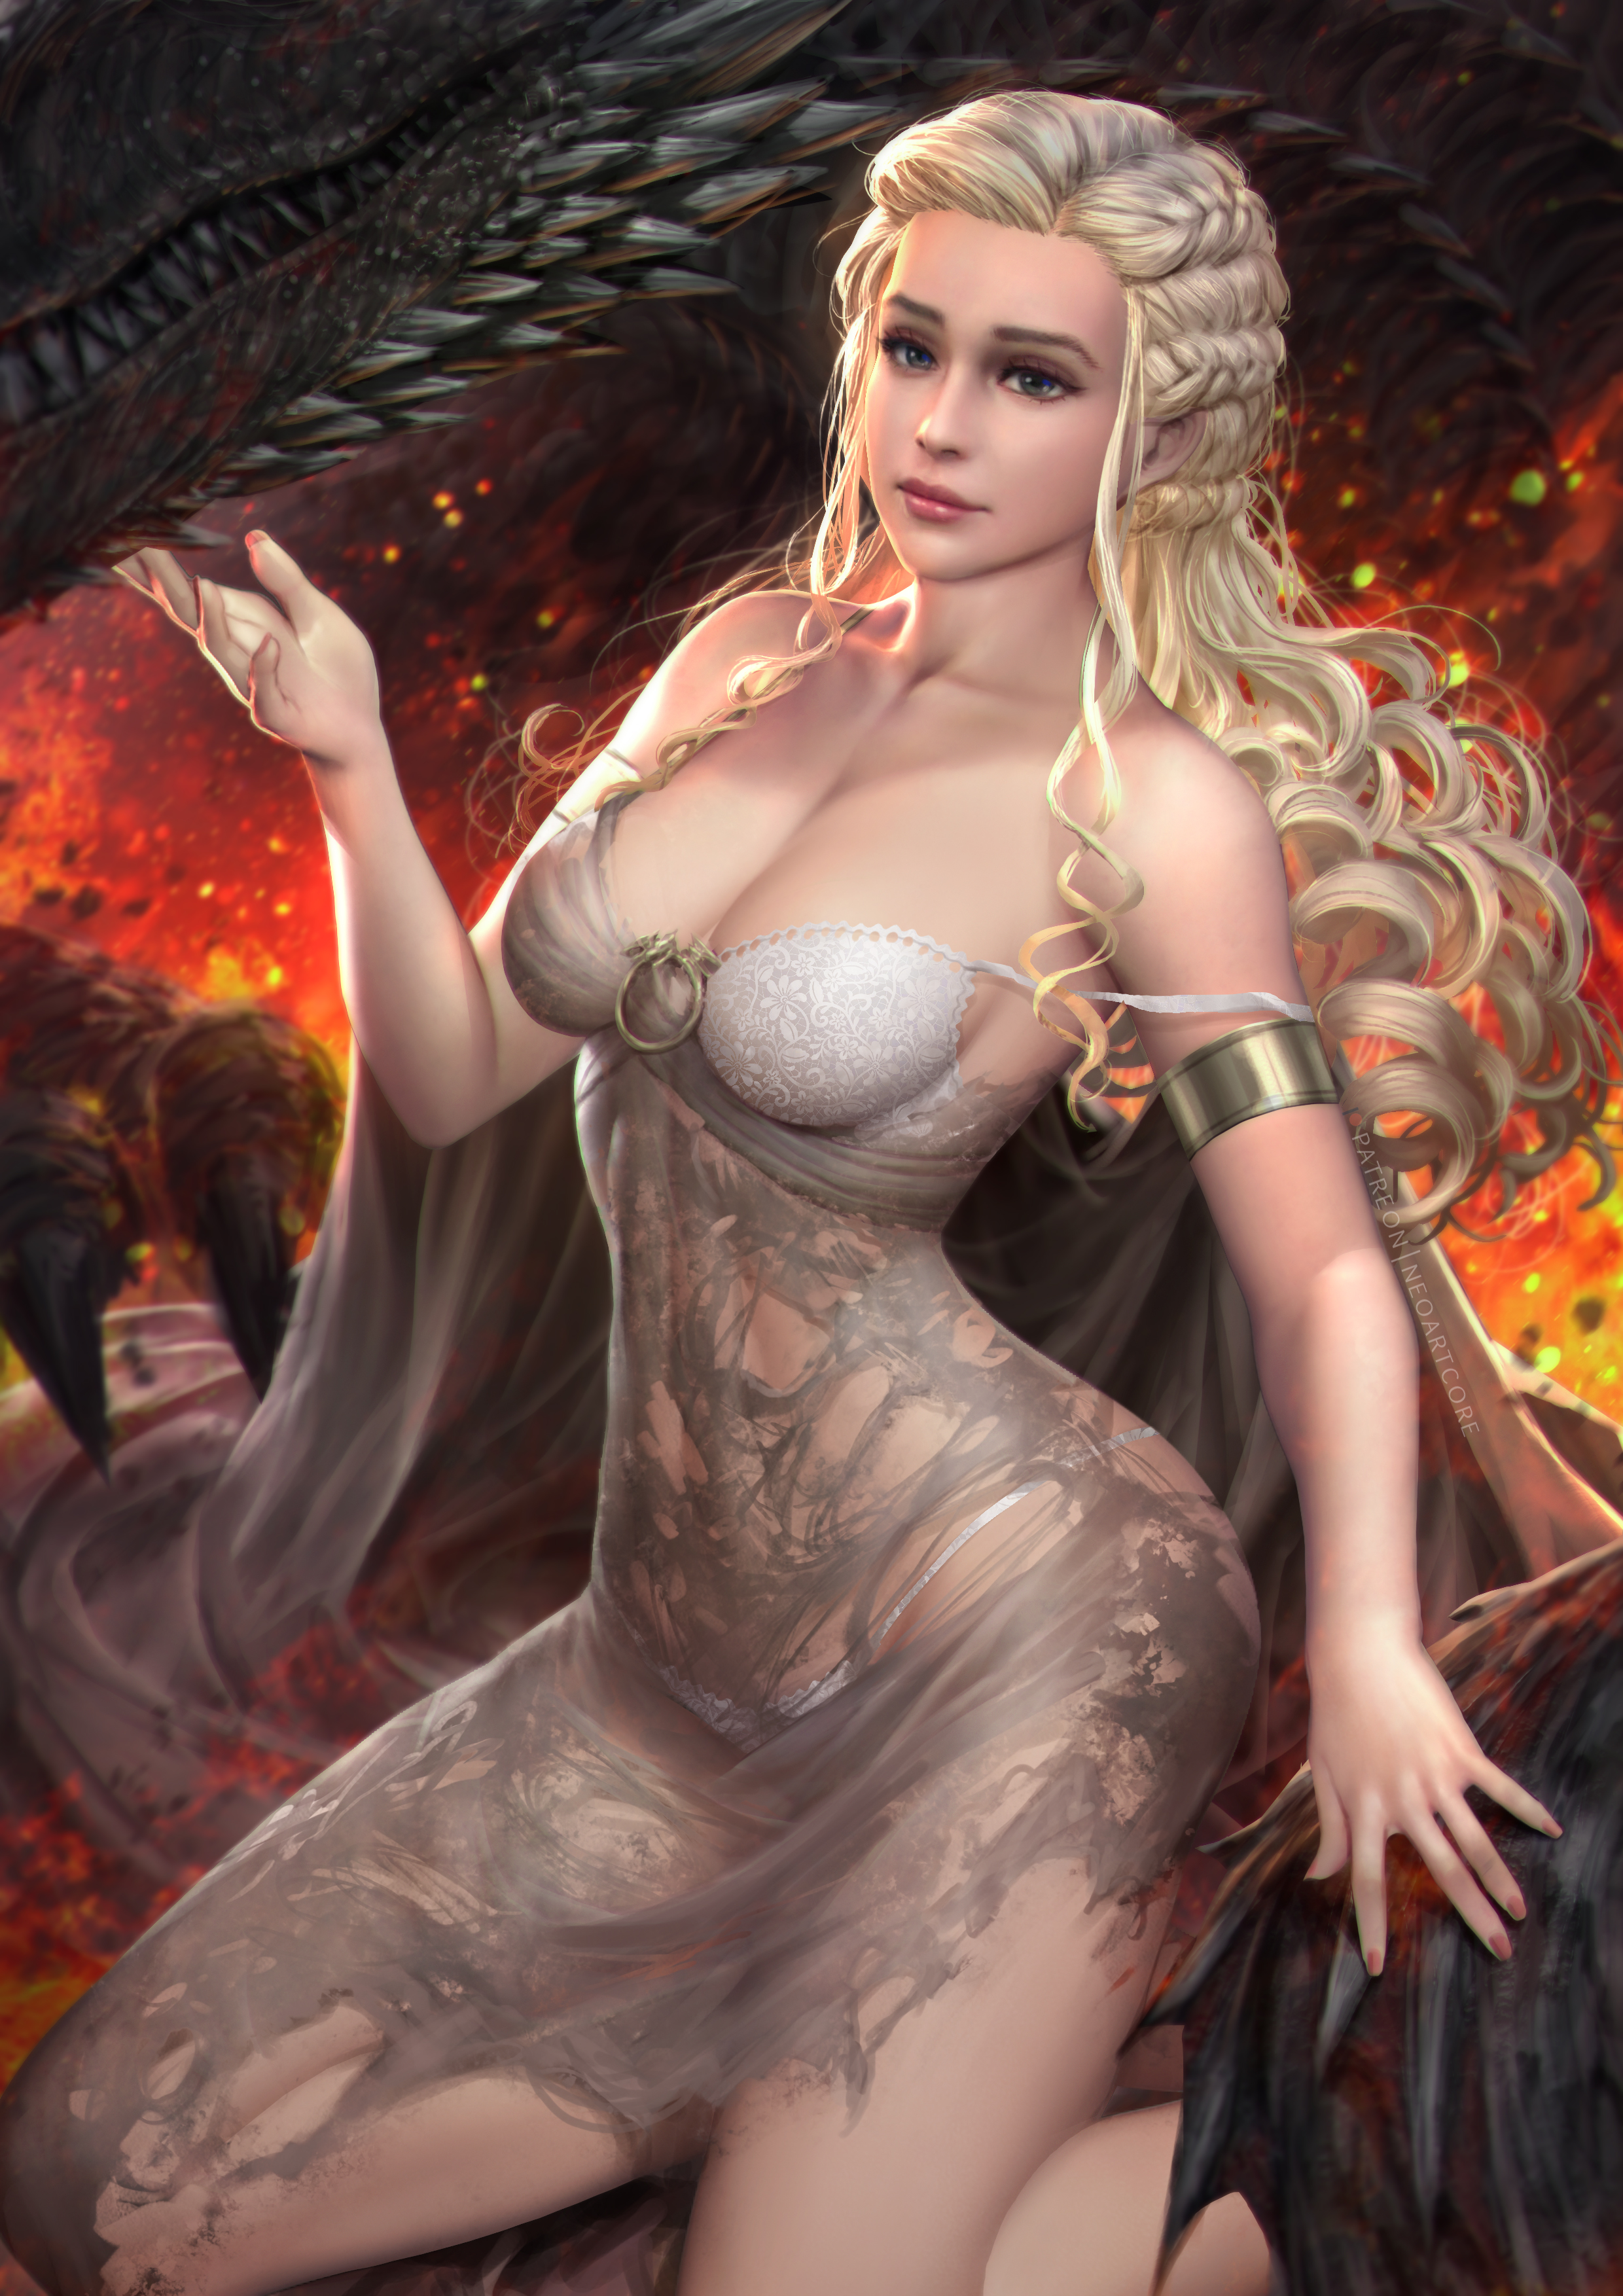 Octokuro – Daenerys